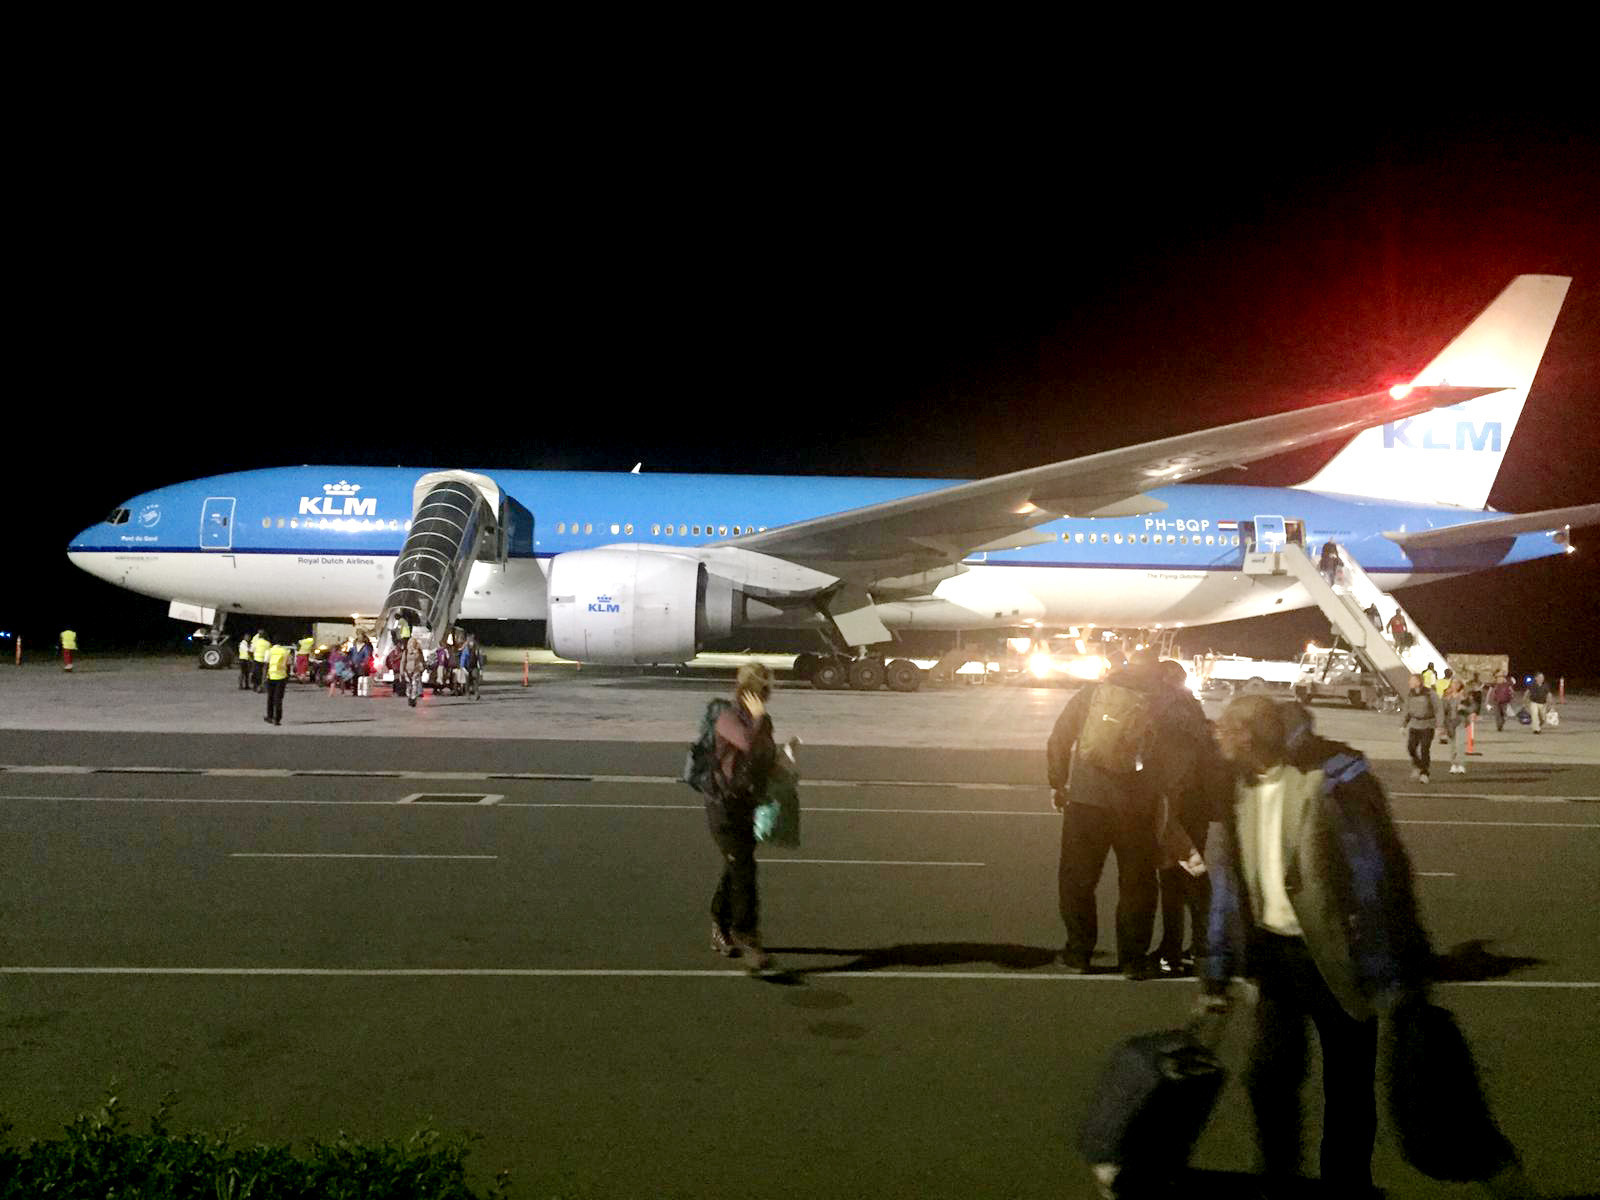 KLM flight arrives at Kilimanjaro International Airport